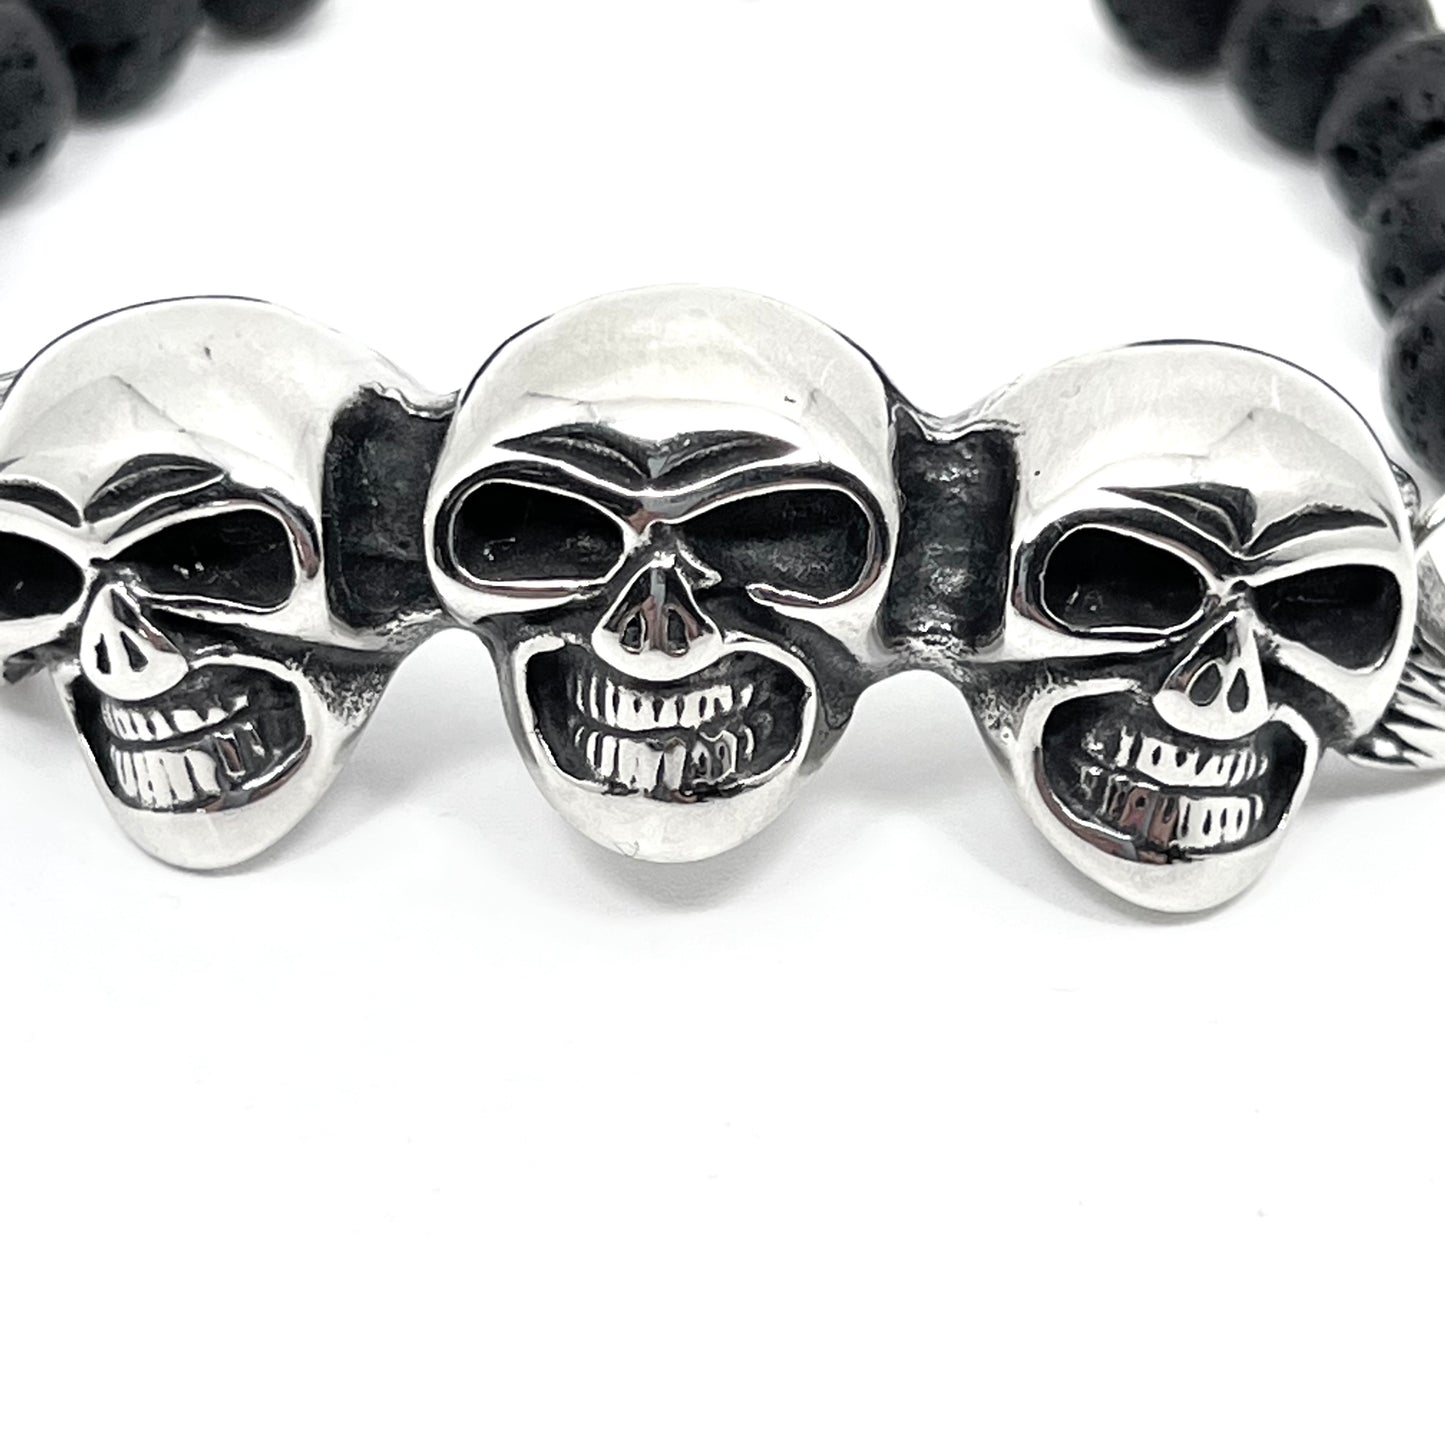 Bracelet with Skulls